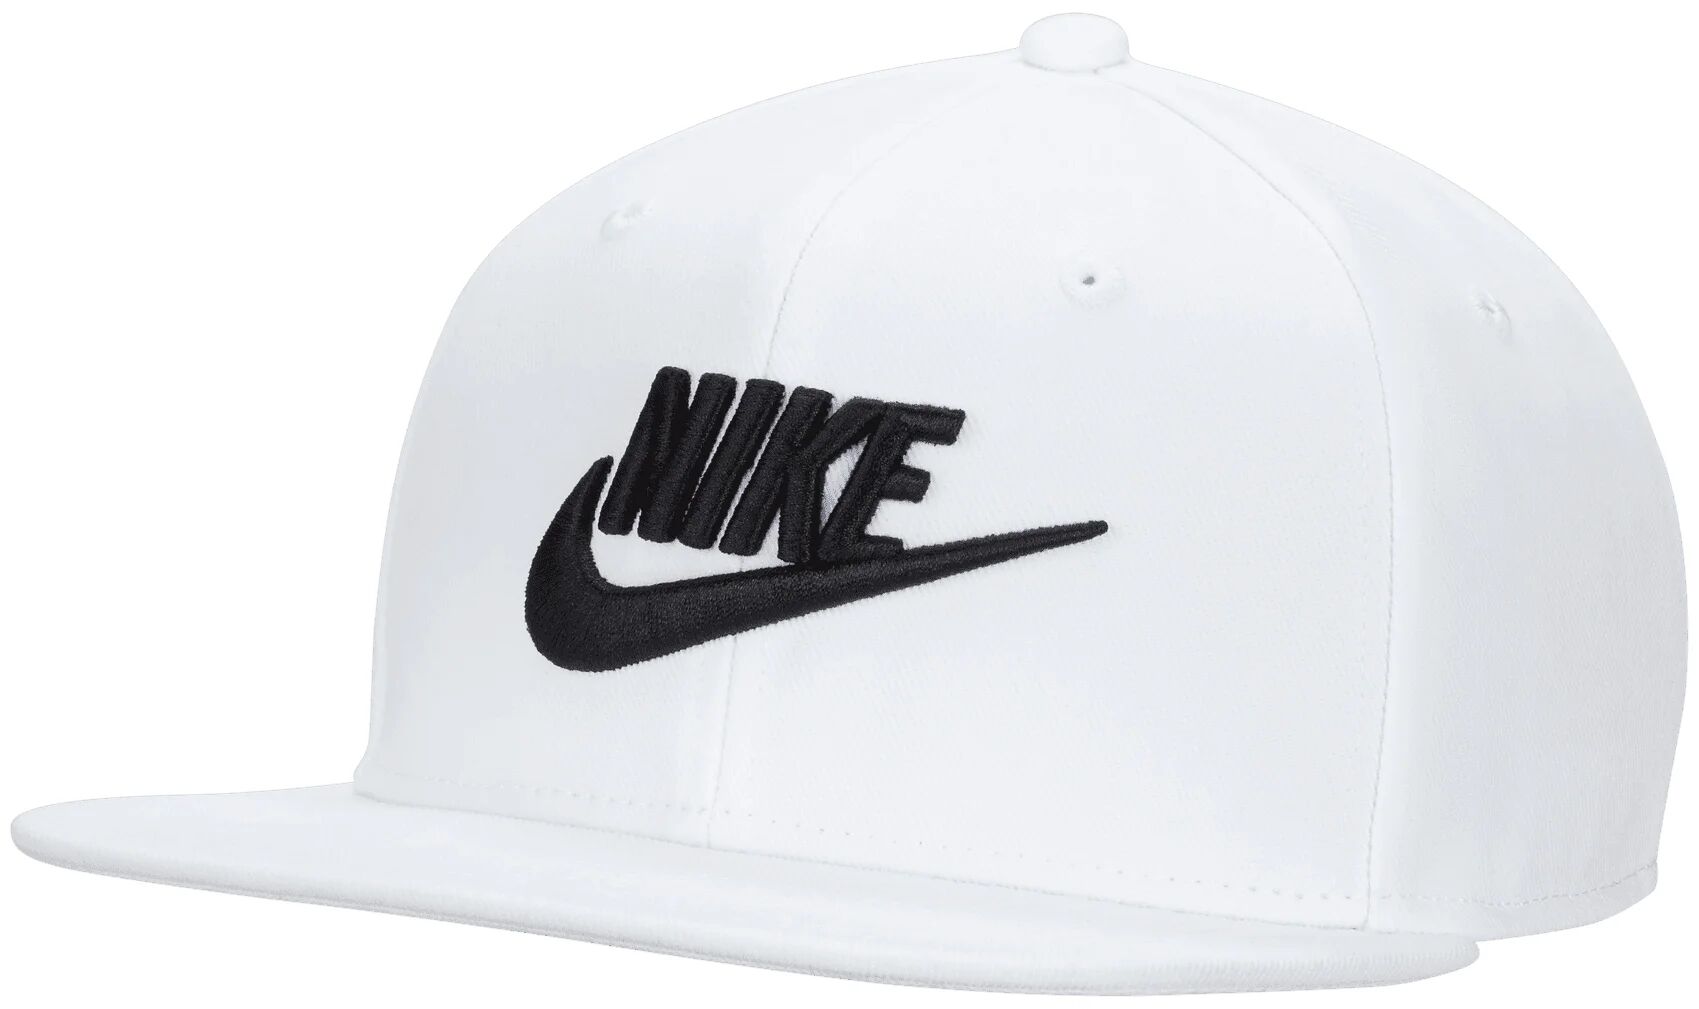 Nike Dri-FIT Pro Structured Futura Men's Golf Hat - White, Size: Medium/Large